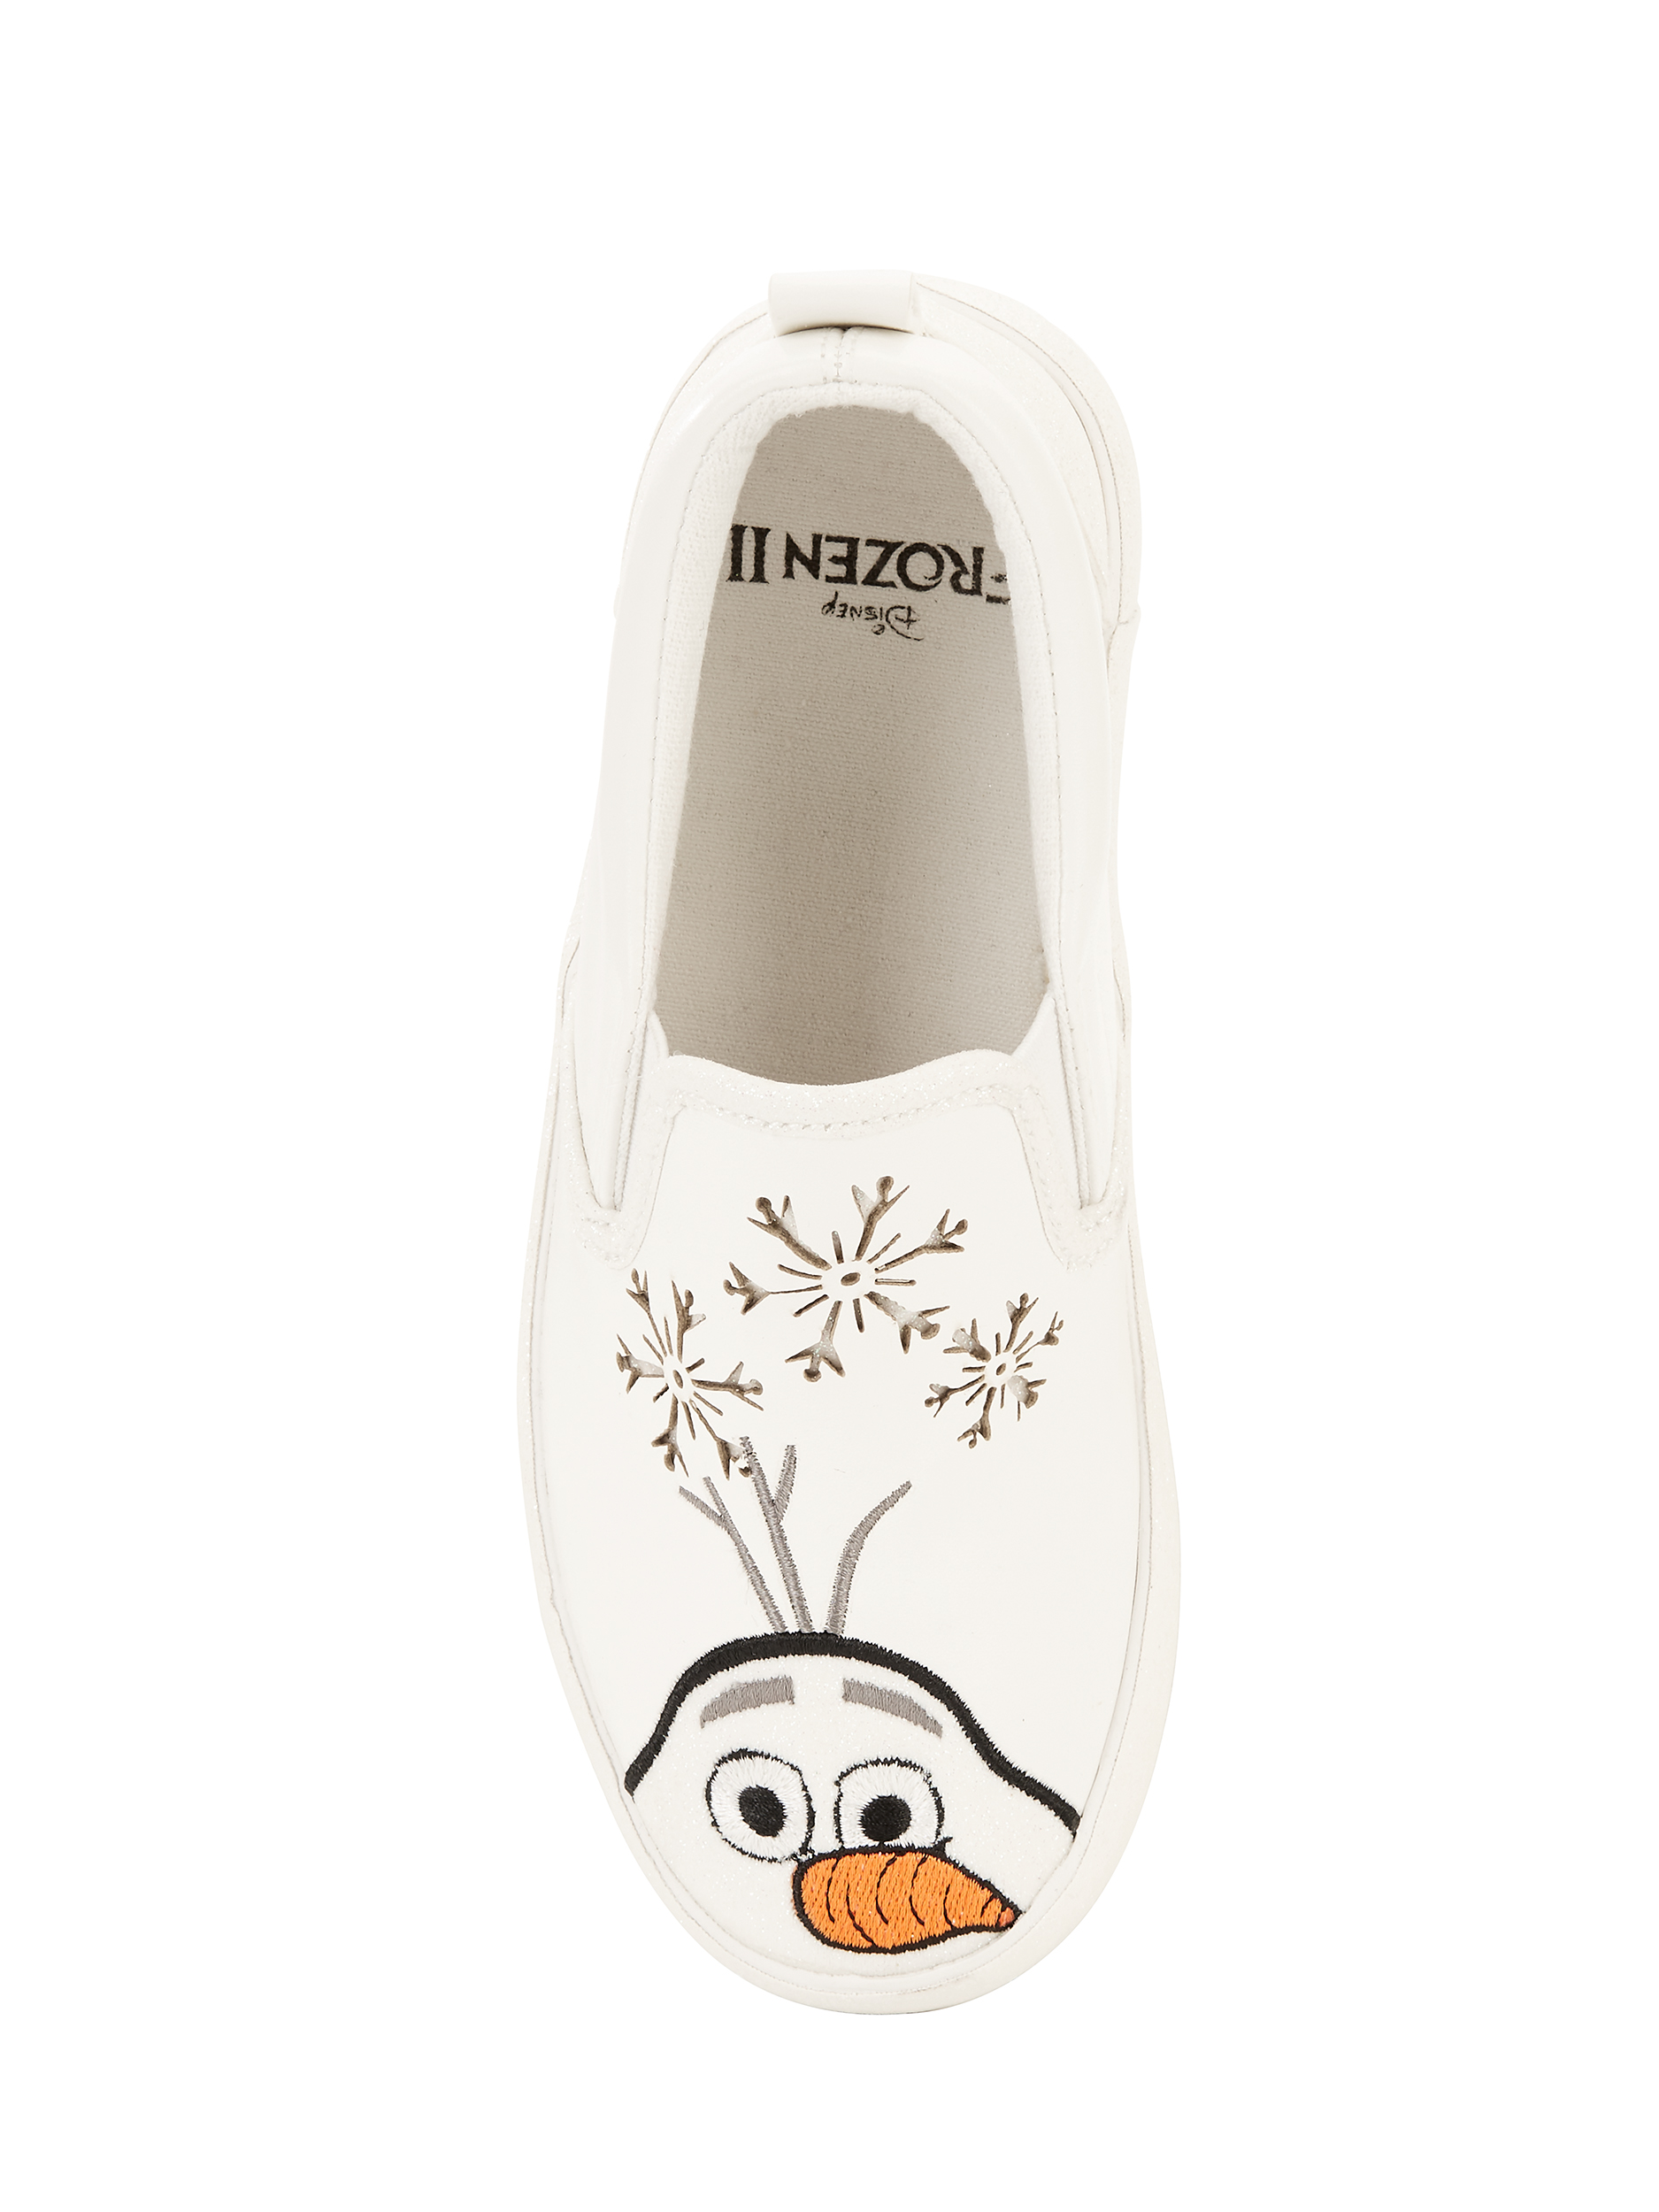 Disney Frozen 2 Olaf Twin Gore Sneakers (Little Girls & Big Girls) - image 5 of 7